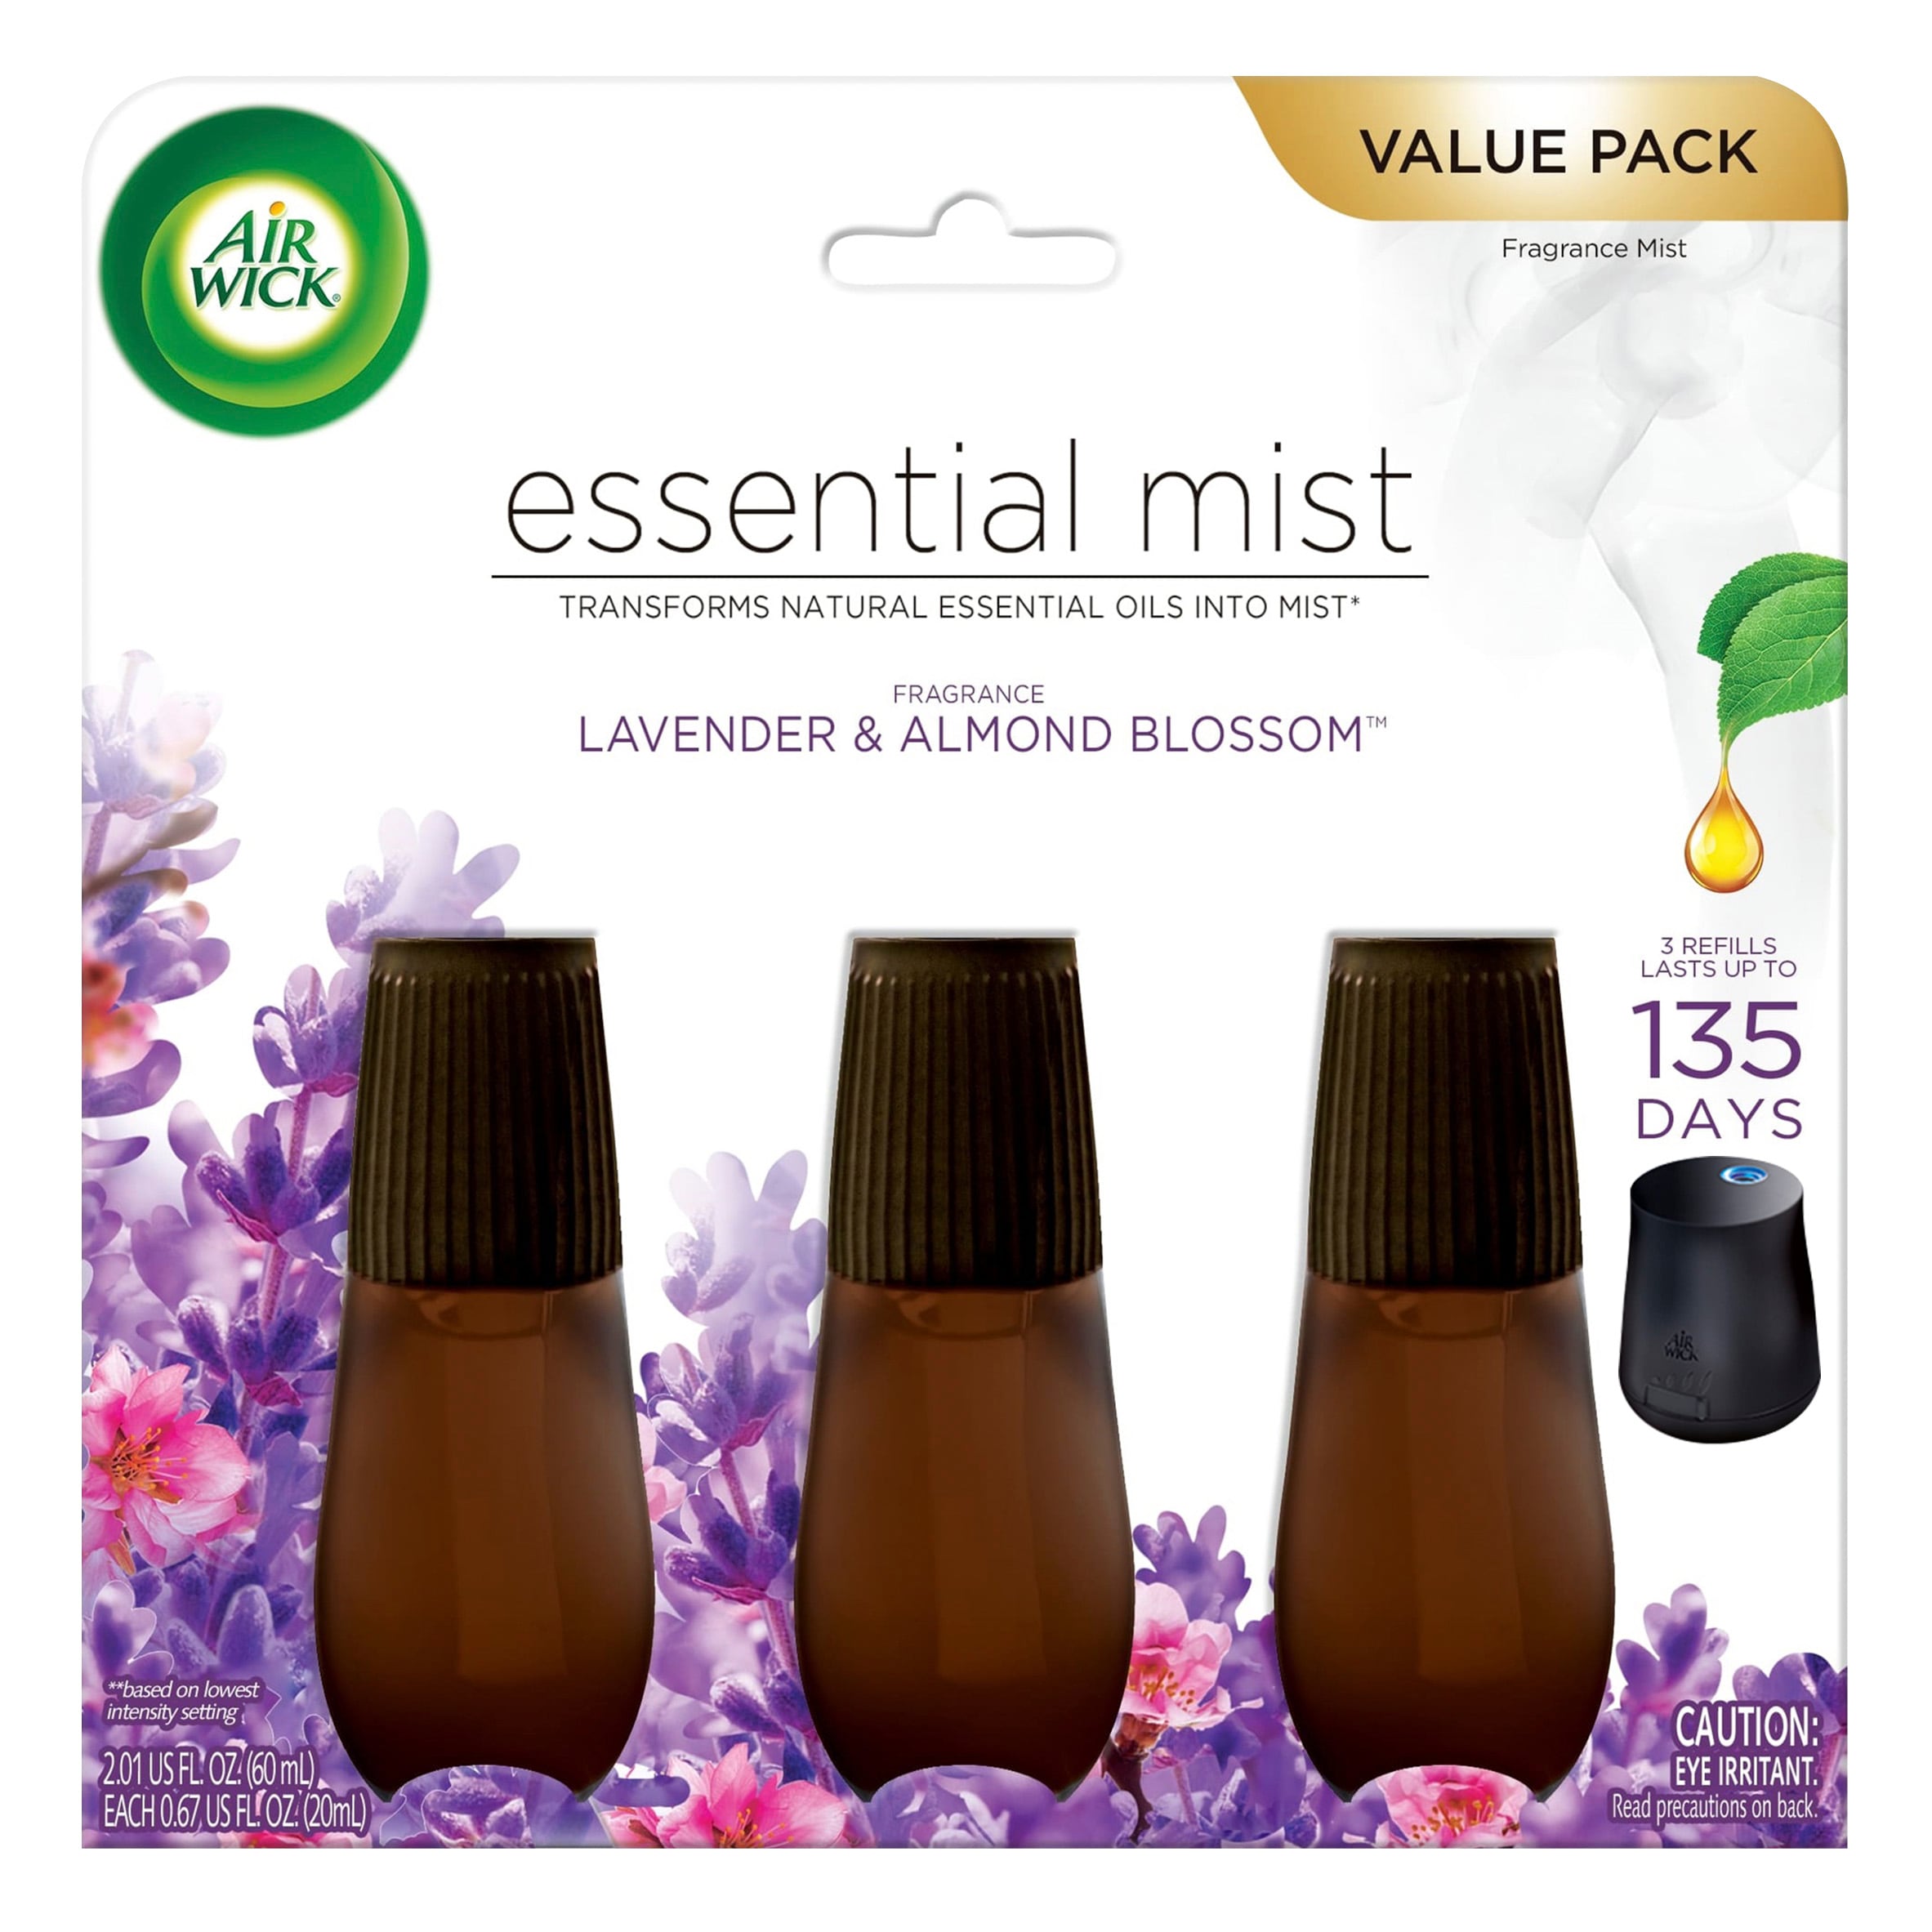 Air Wick Essential Mist, Essential Oil Diffuser, (Diffuser + 1 Refill), Apple  Cinnamon Medley, Air Freshener 